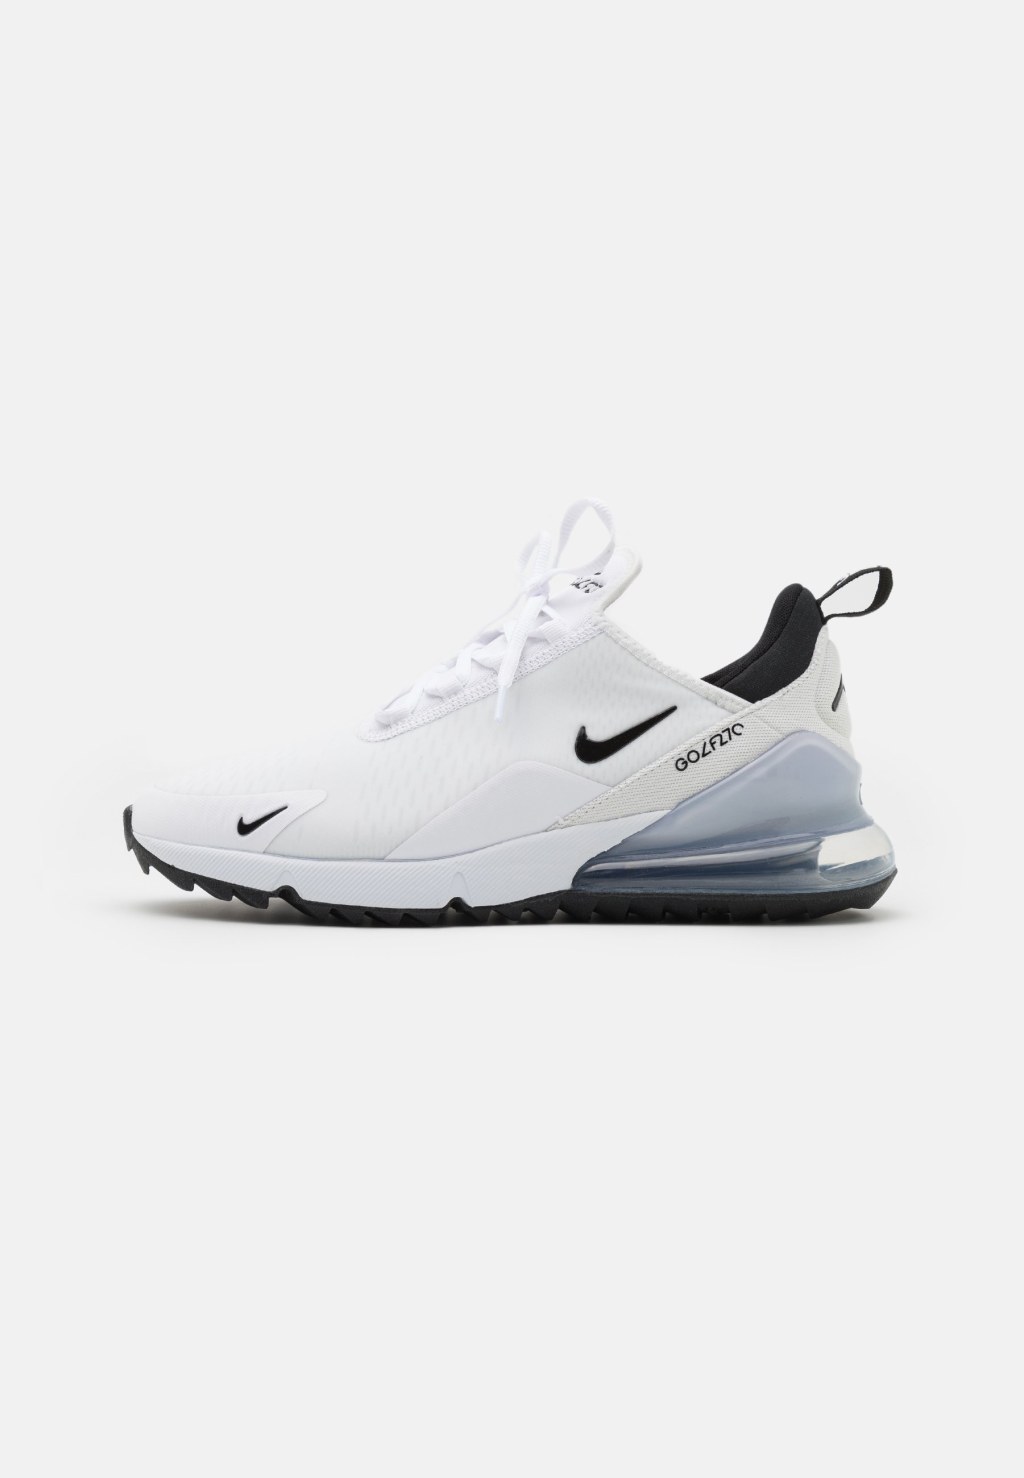 Picture of: Nike Golf AIR MAX  G – Golfschuh – white/black/pure platinum